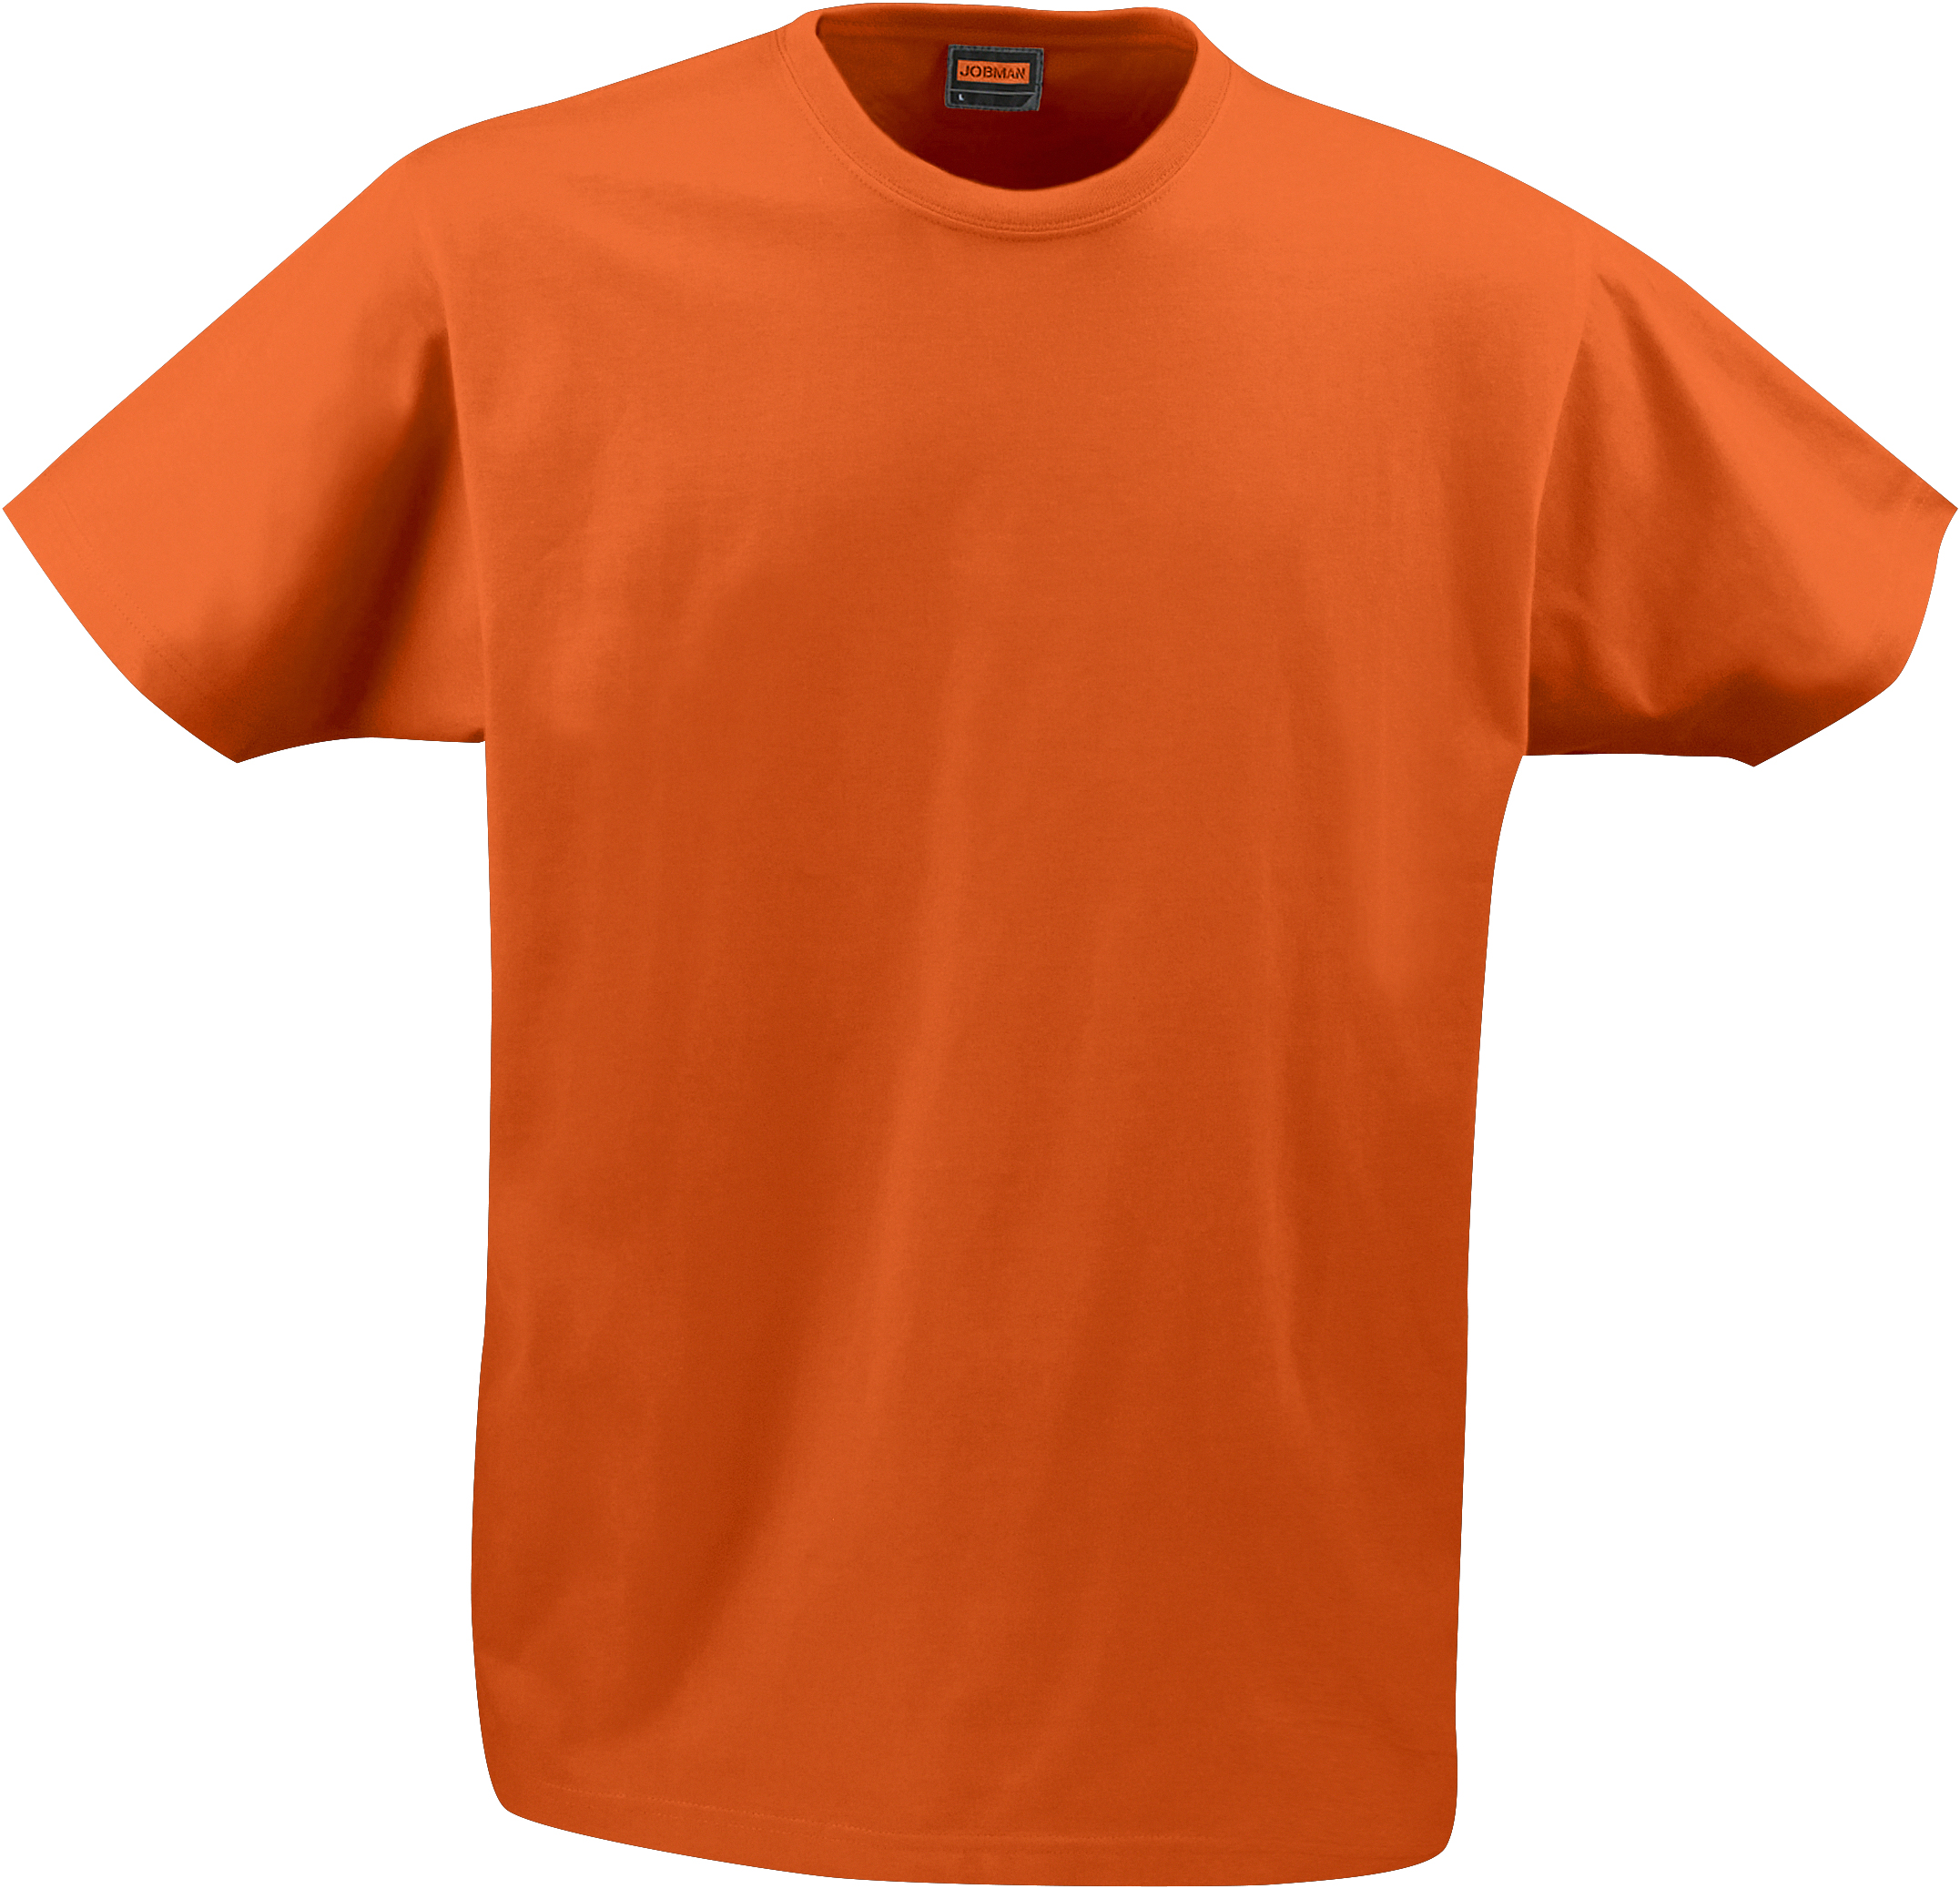 5264 T-SHIRT HOMME XS orange